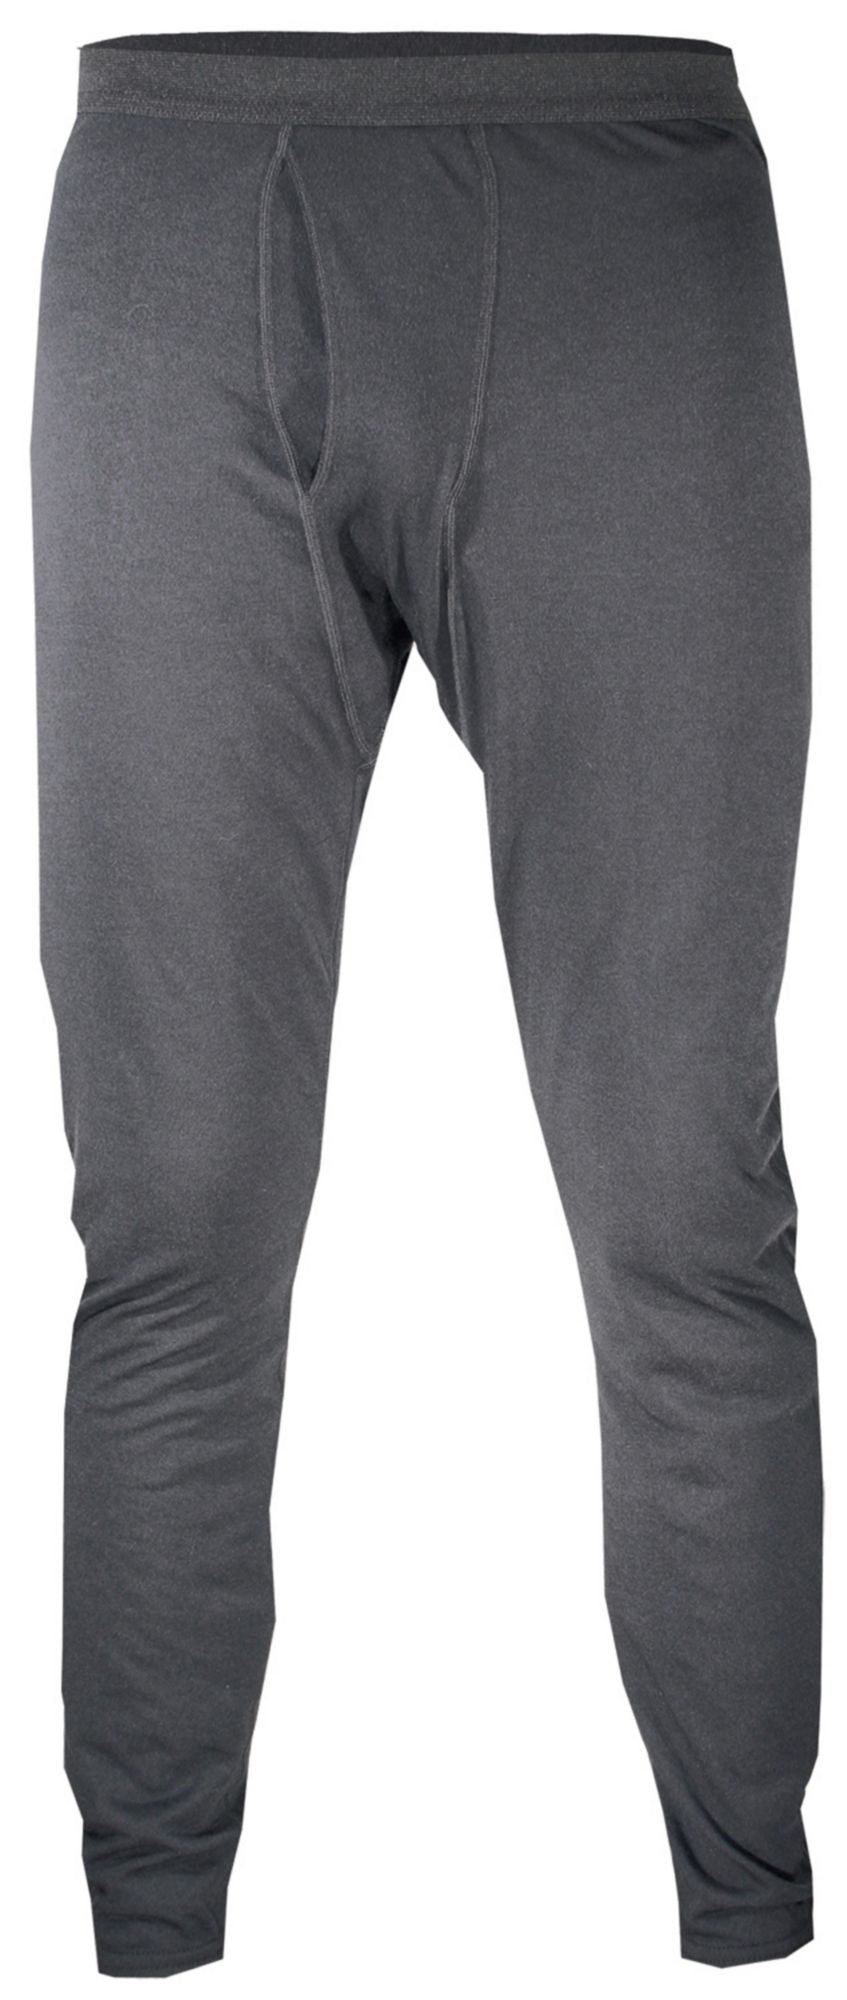 Hot Chillys Men's Pepper Skins Base Layer Pants | DICK'S Sporting Goods